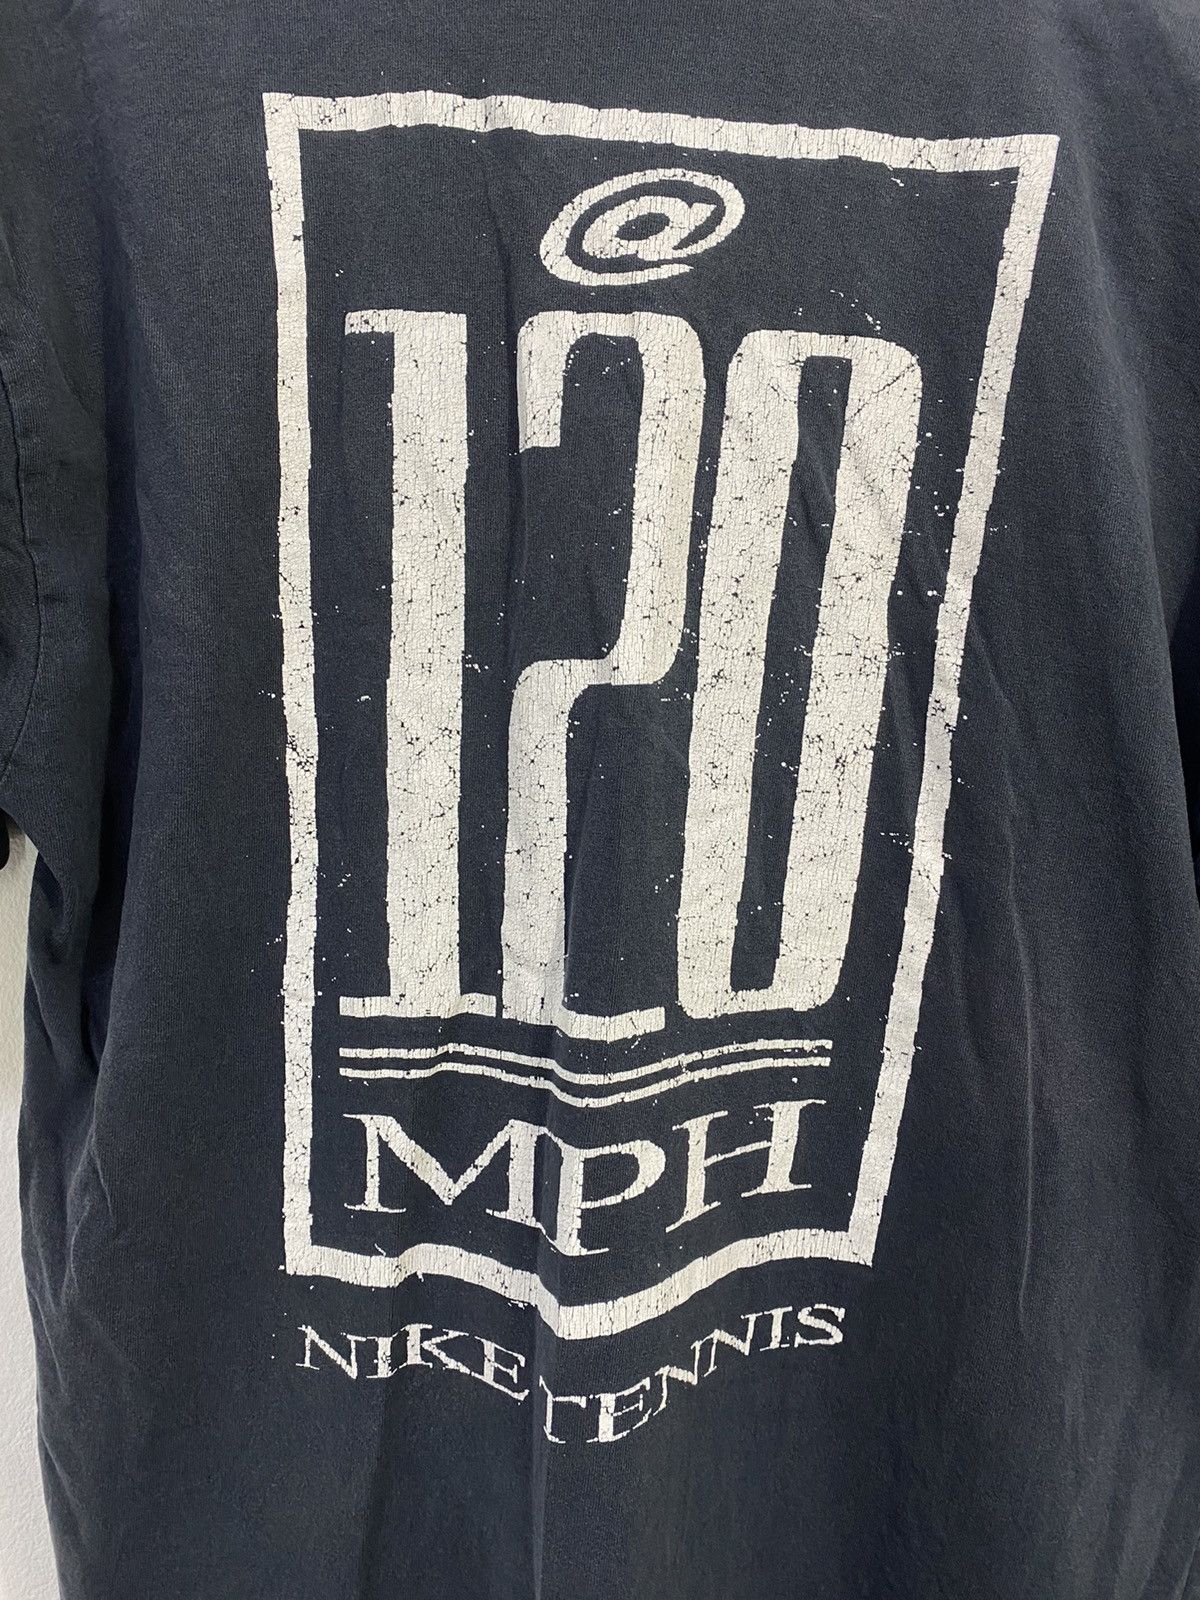 Vintage 90’s Nike Shirt 120 MPH Nike Tennis Shirt - 4